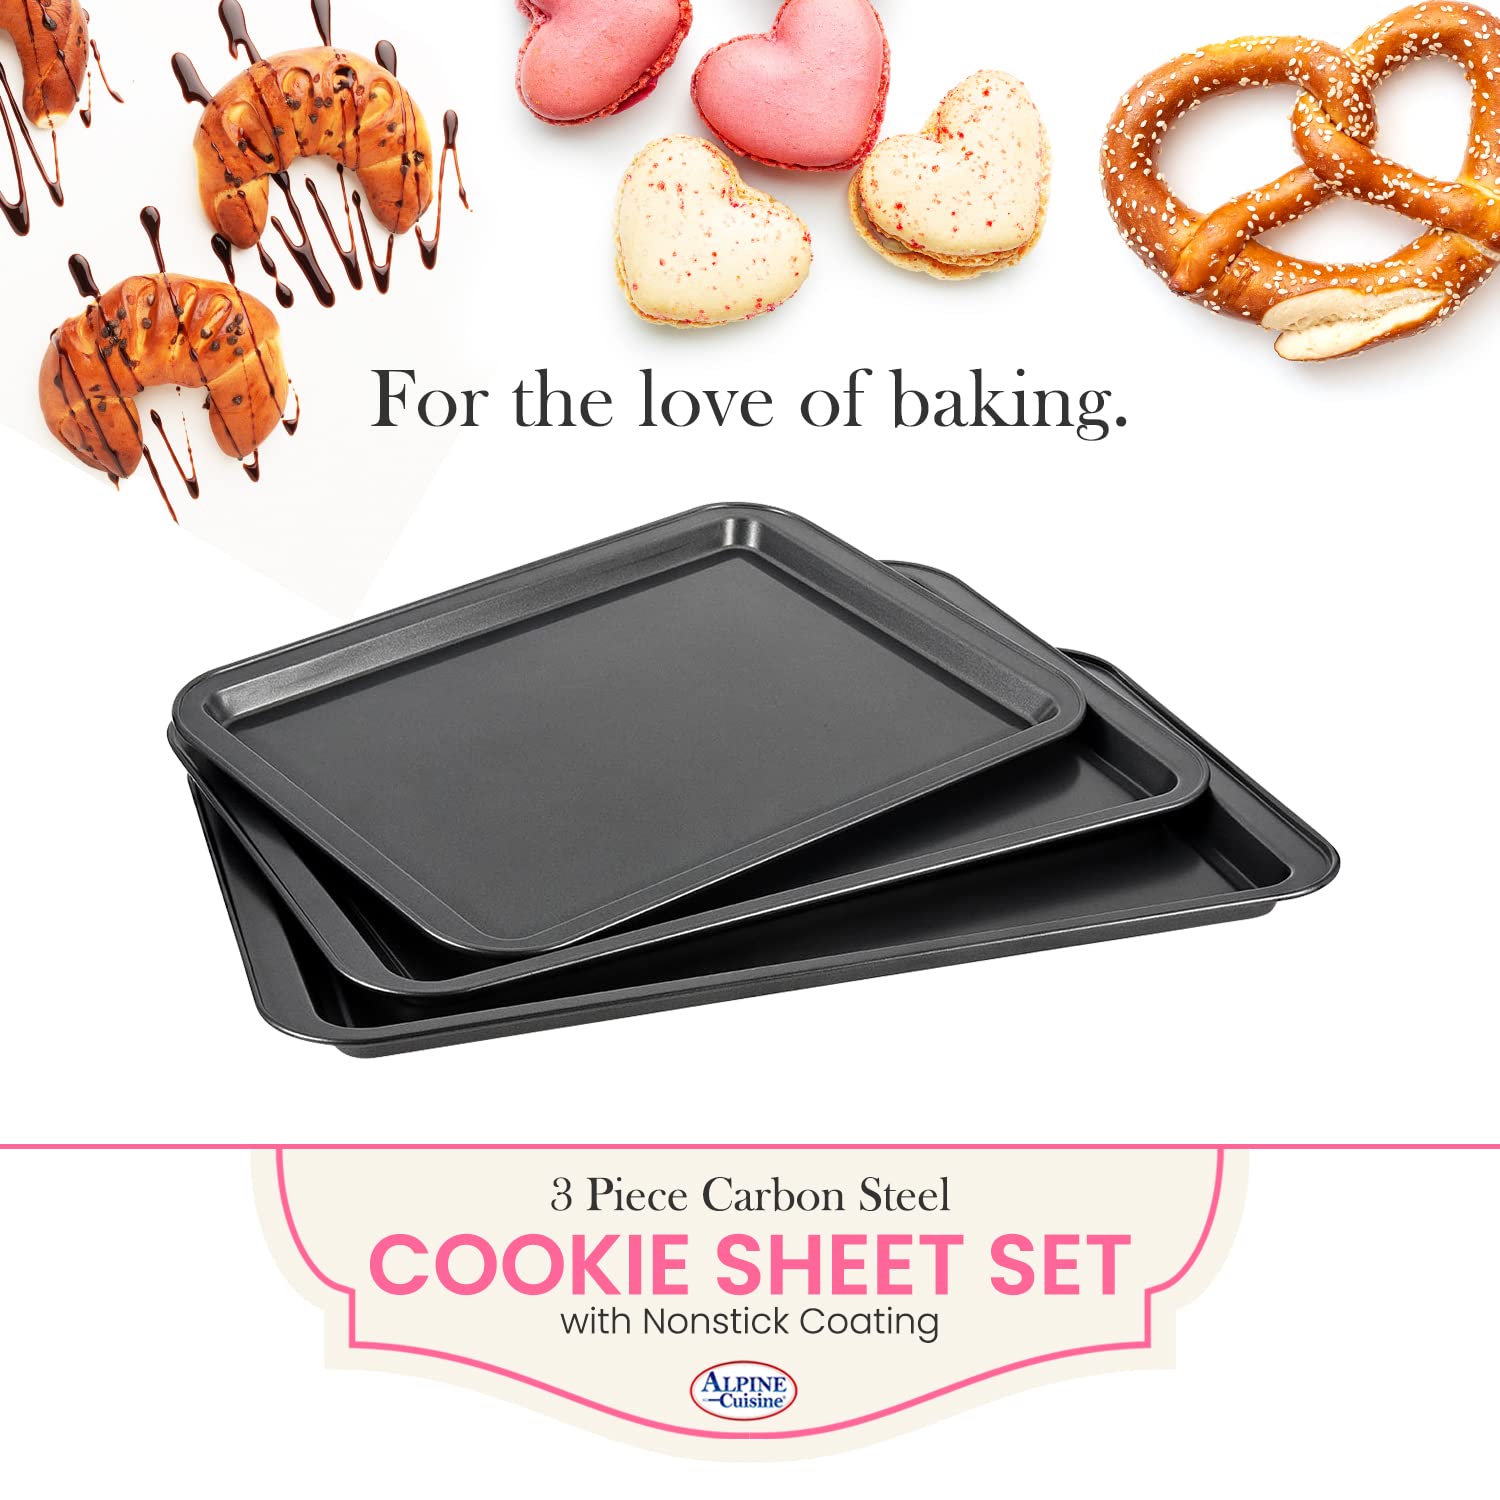 Cookie Sheet Set - Shop